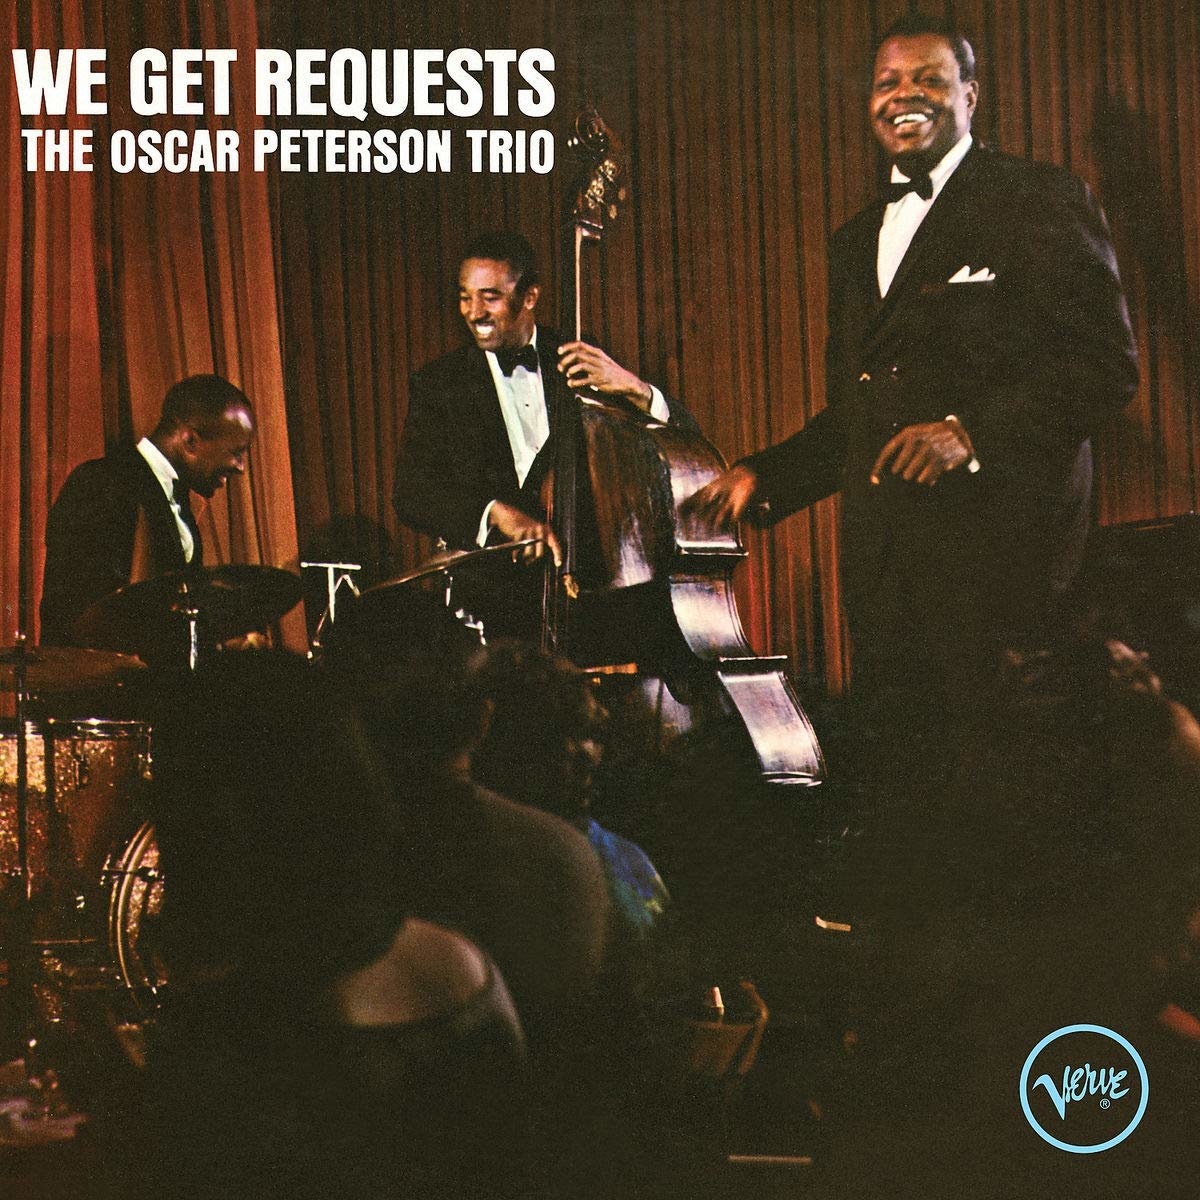 Oscar Peterson Trio - We Get Requests (Acoustic Sounds Series